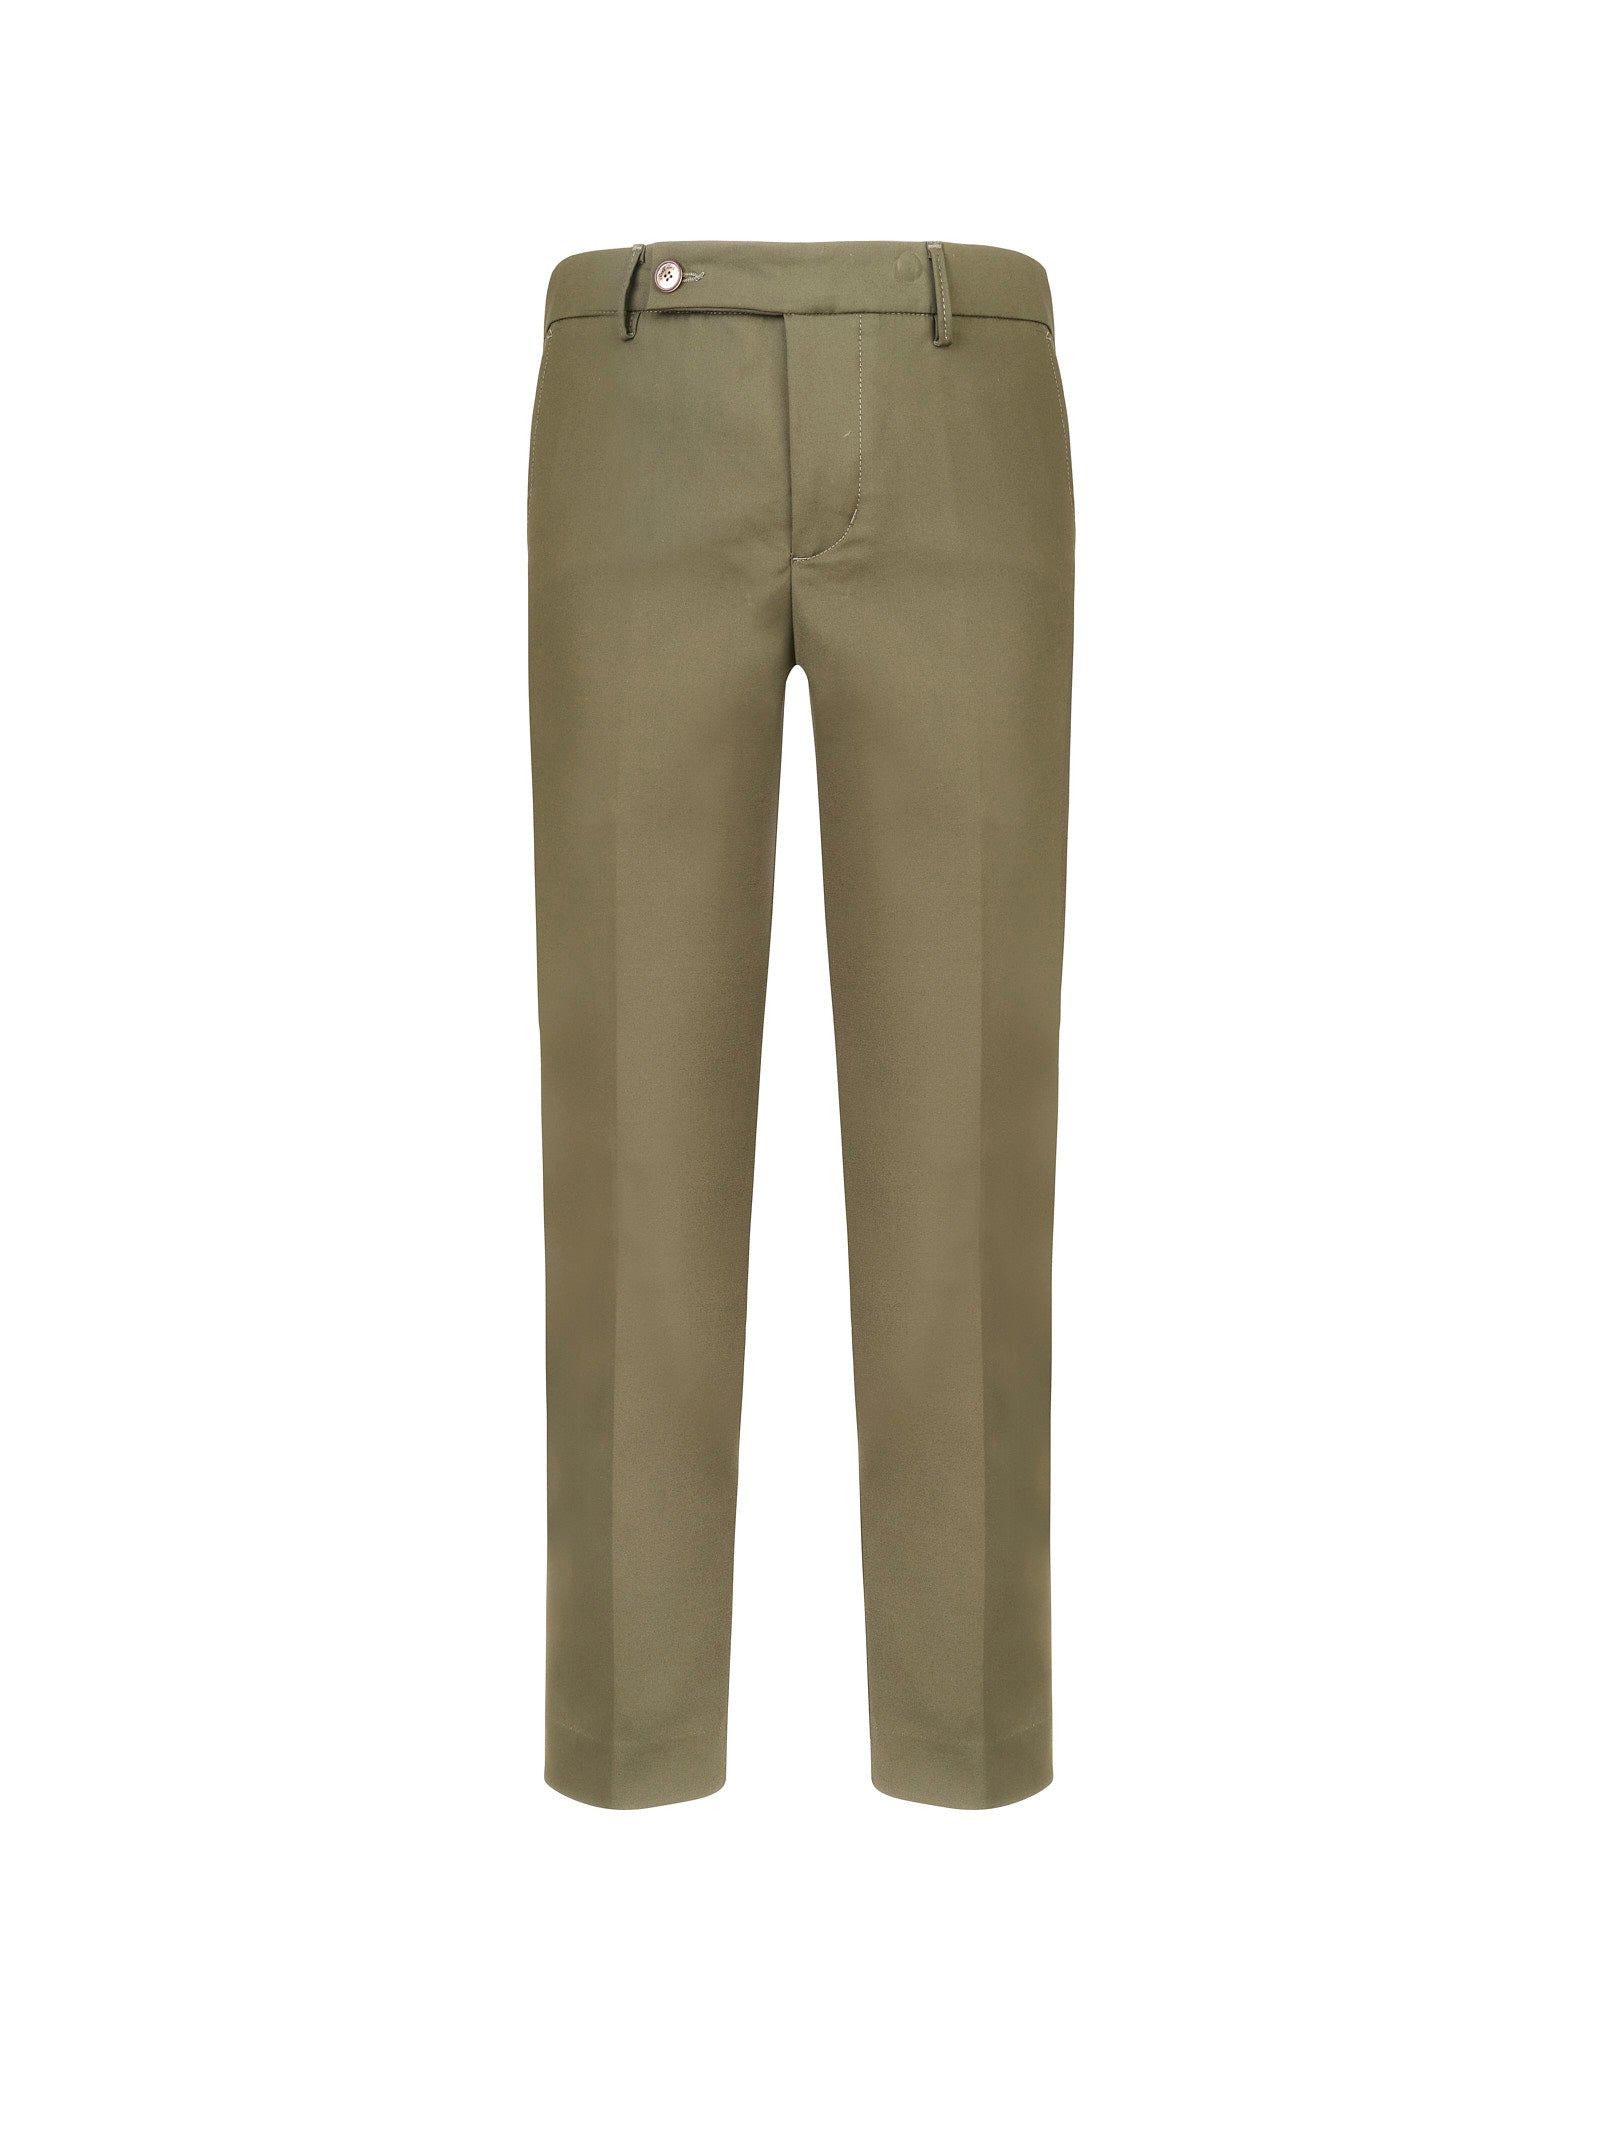 Pantalone ENTRE AMIS Tasca america cinto elastico
Verde militare